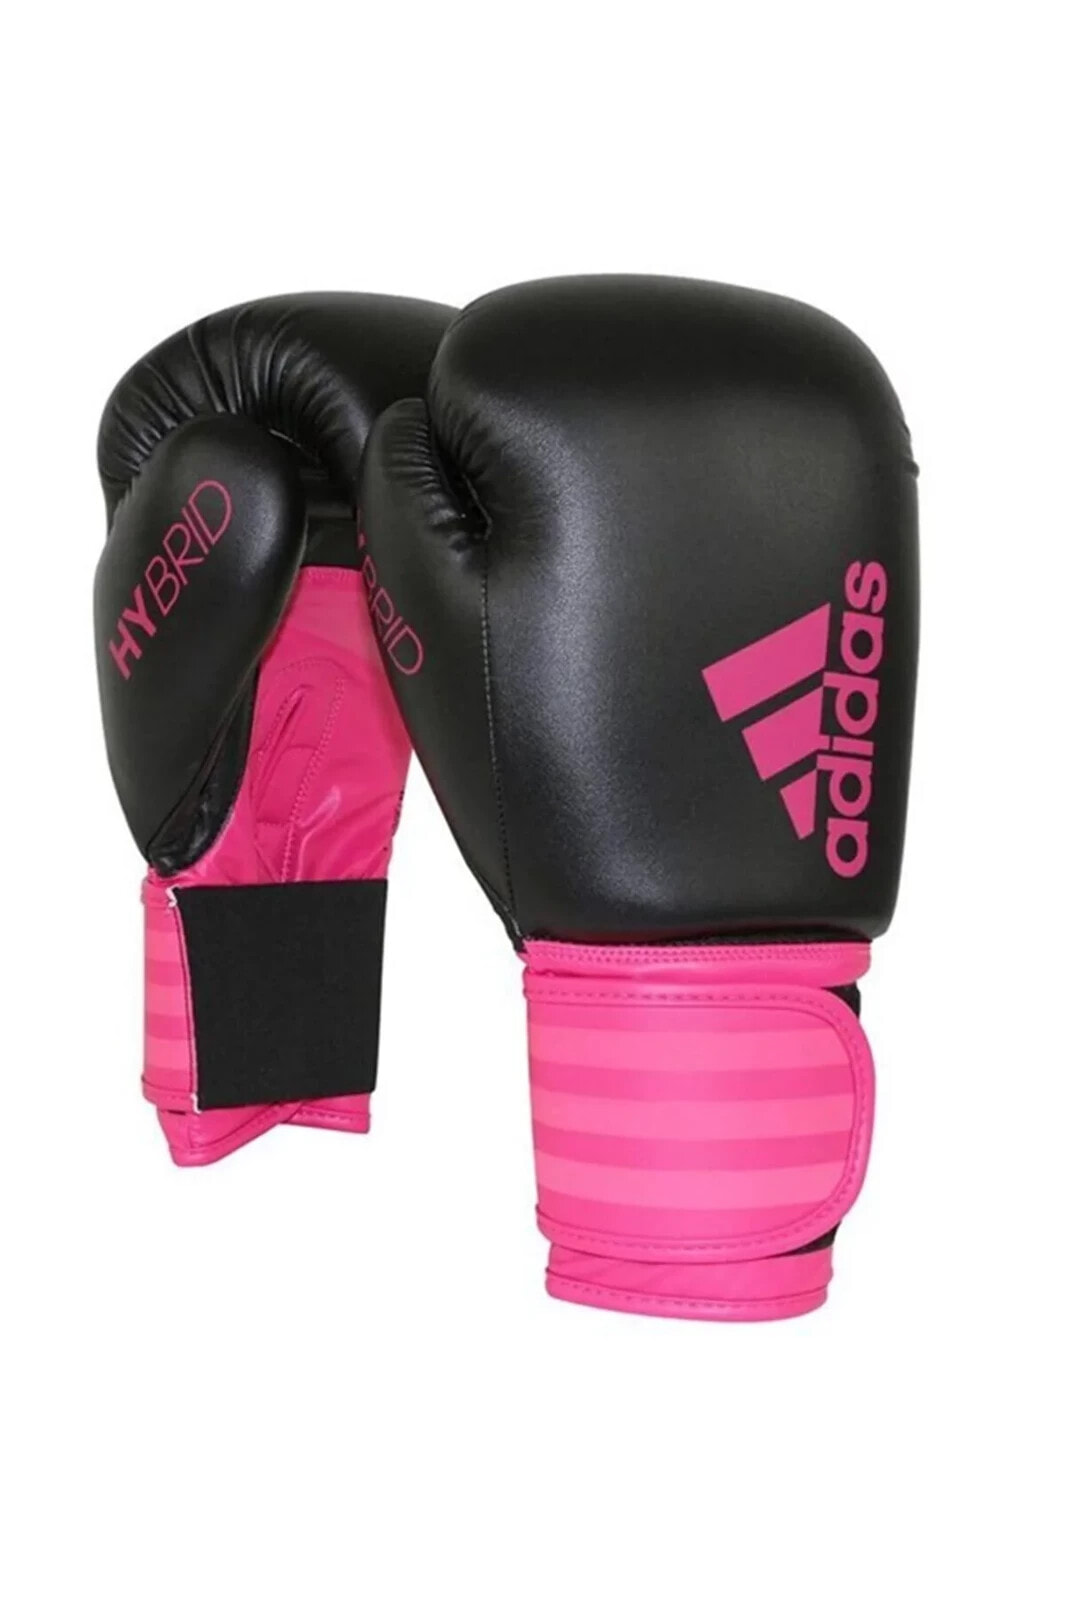 Suni Deri Hybrid100 Dynamic Fit Boks Eldiveni Boxing Gloves Adıhdf100 Siyah